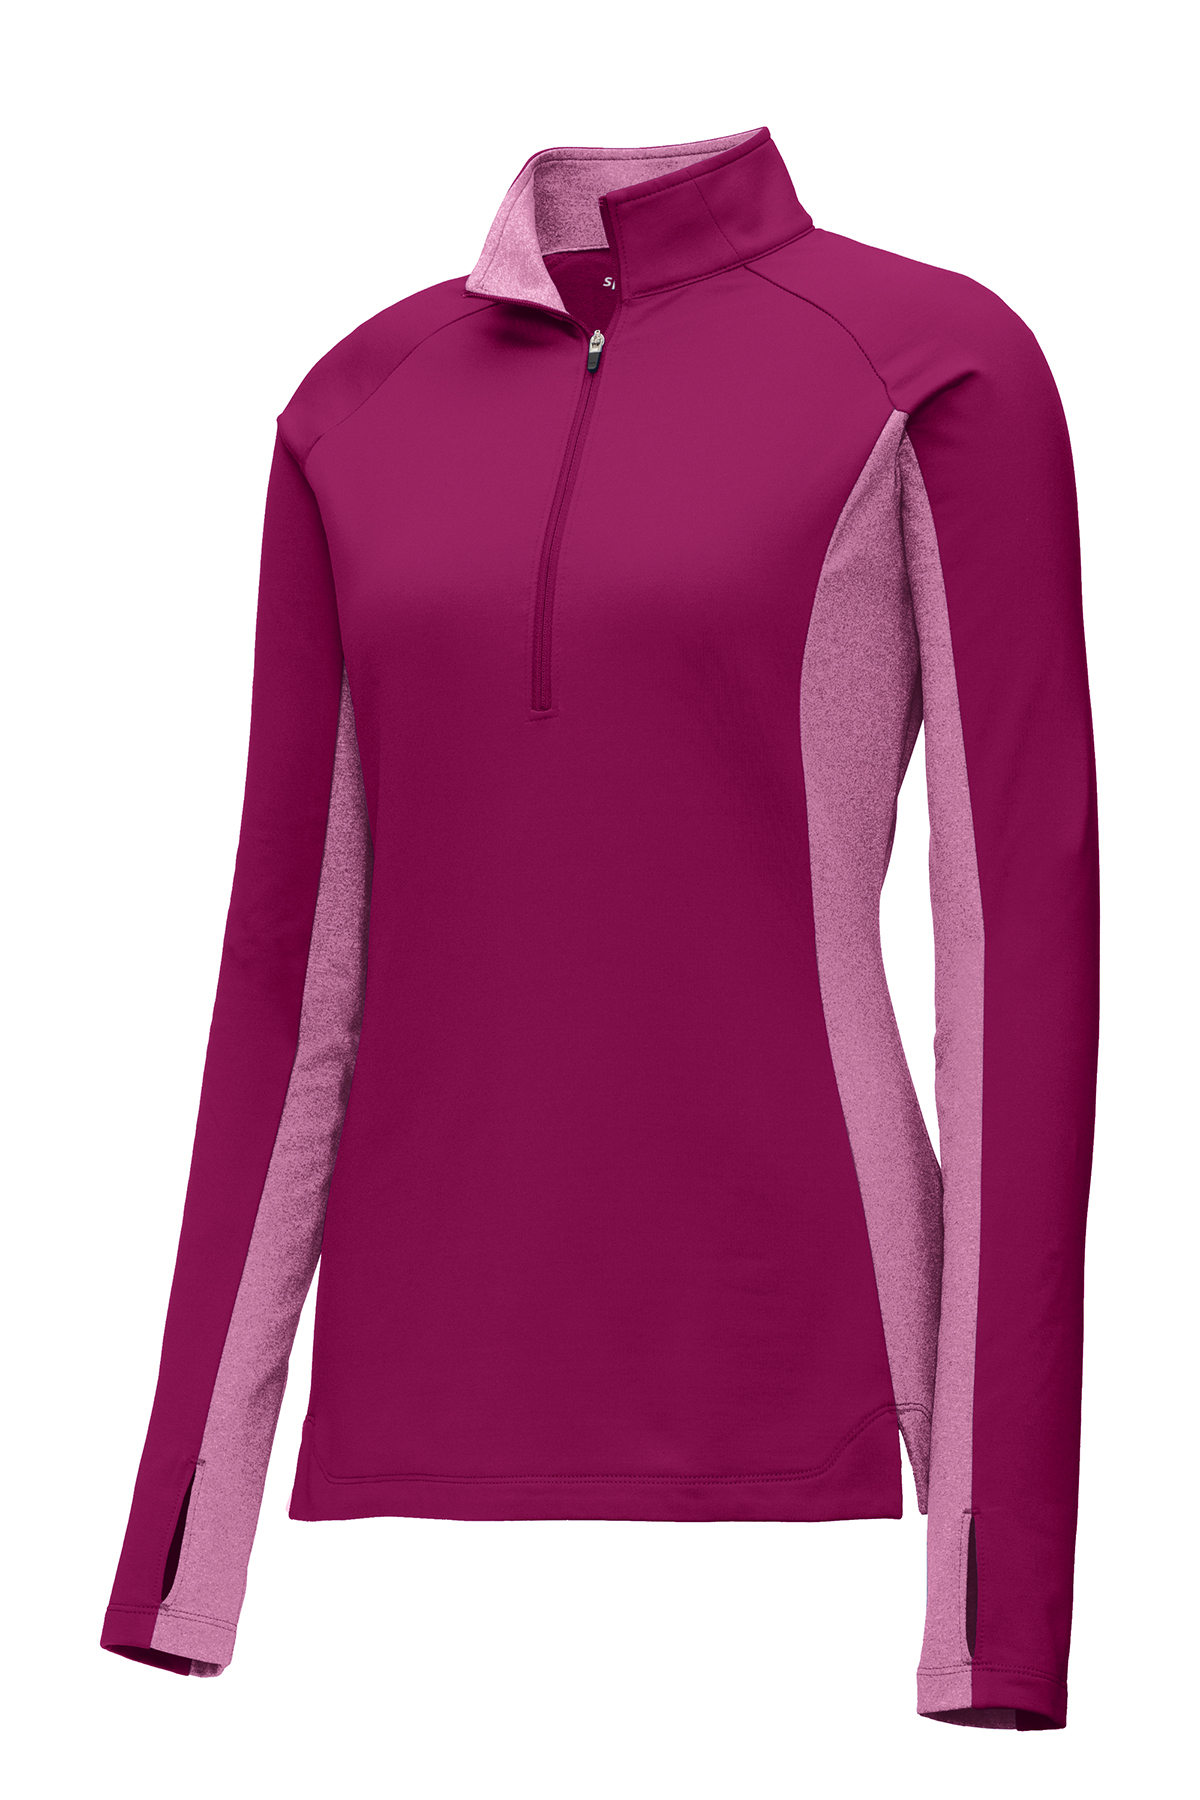 Swing Out Sister Ultra-Soft 1/4 Zip Fleece in Digital Lavender – GolfGarb